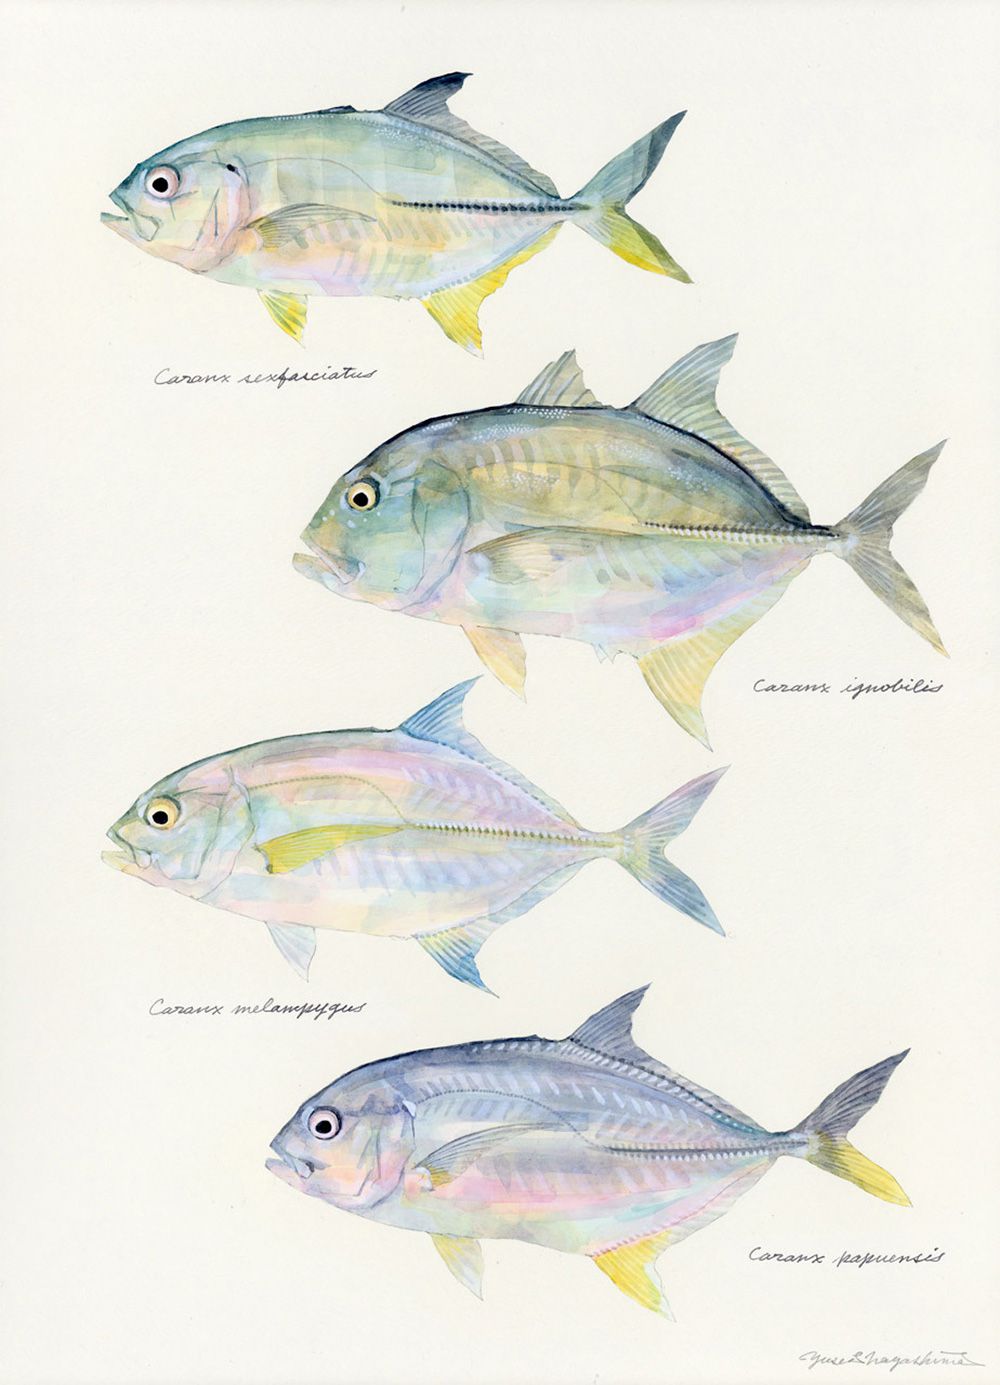 Gorgeous Marine Animal Watercolors By Yusei Nagashima 14